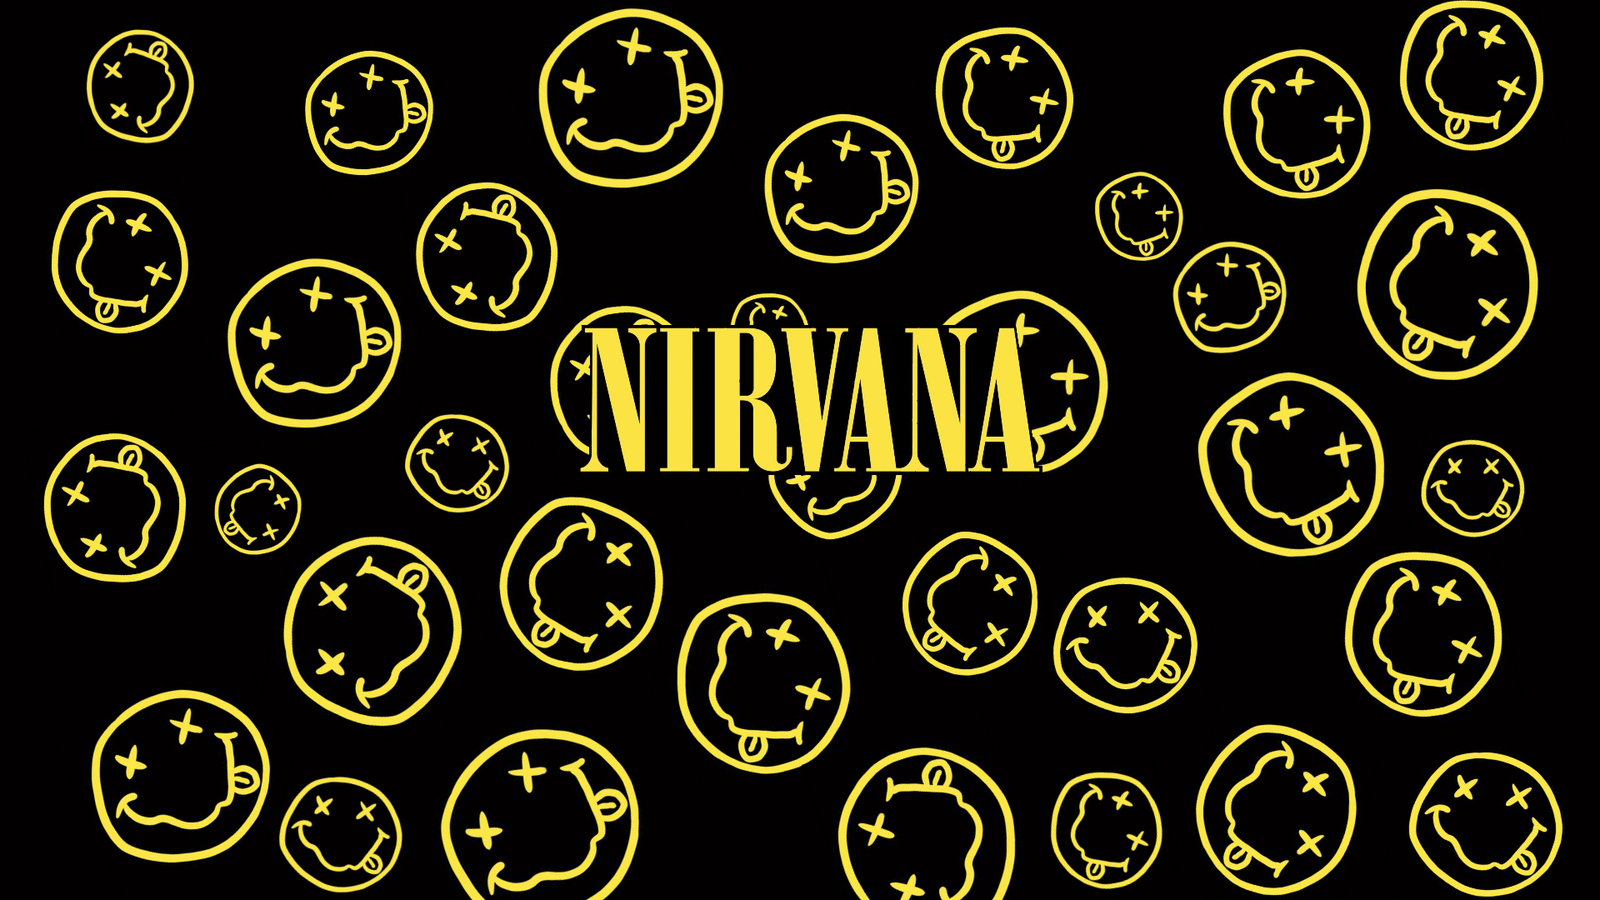 Nirvana Logo Wallpaper Wallpaper. Nirvana, Nirvana logo wallpaper, Nirvana wallpaper